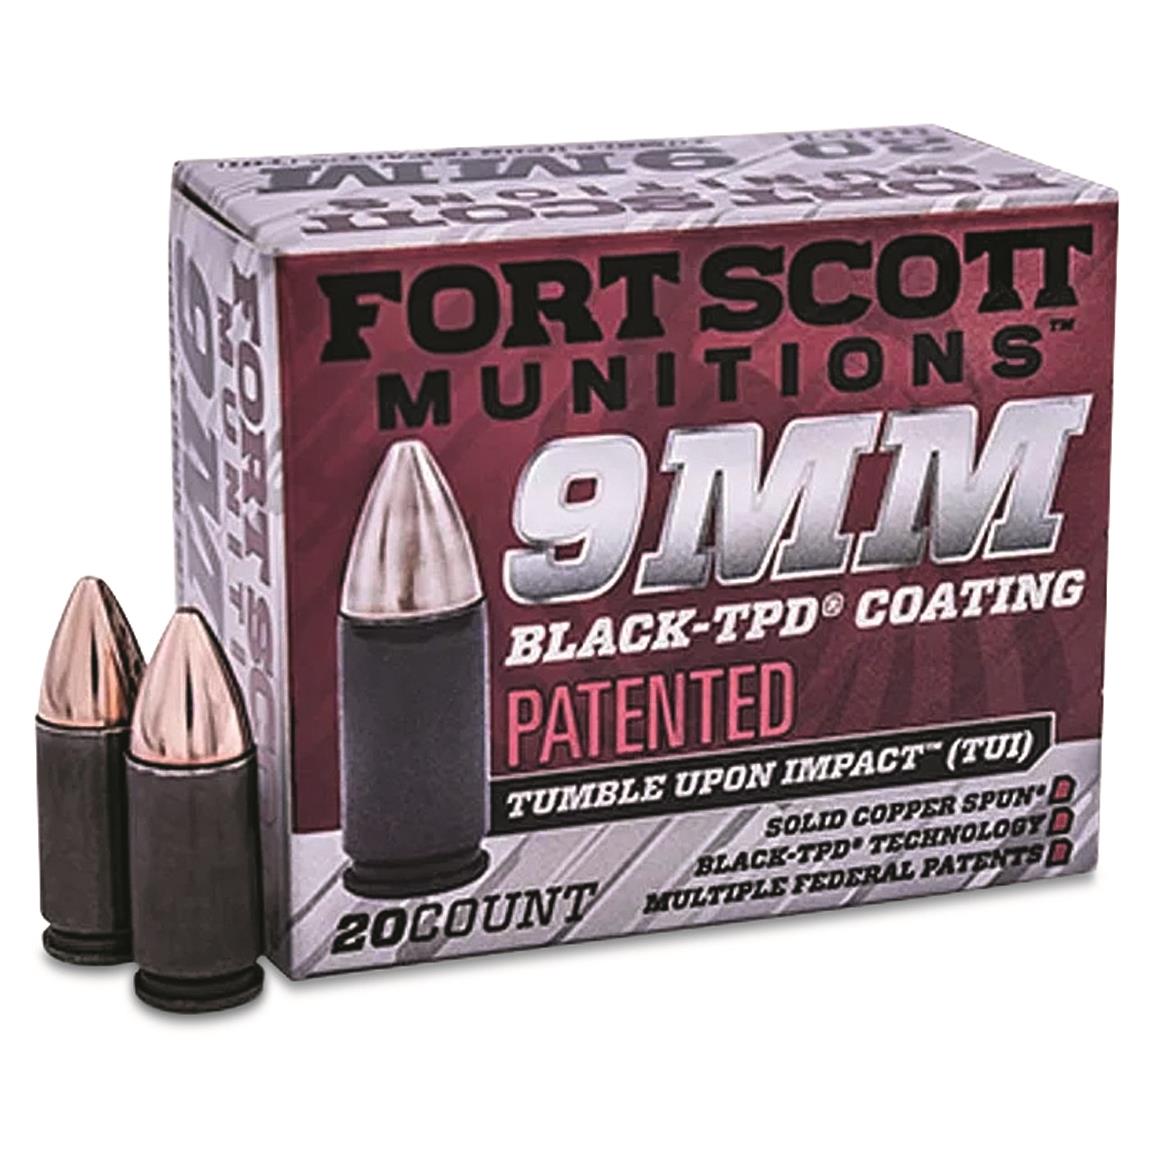 Fort Scott Tumble Upon Impact TBD-9 Ammo, 9mm, SCS, 80 Grain, 20 Rounds